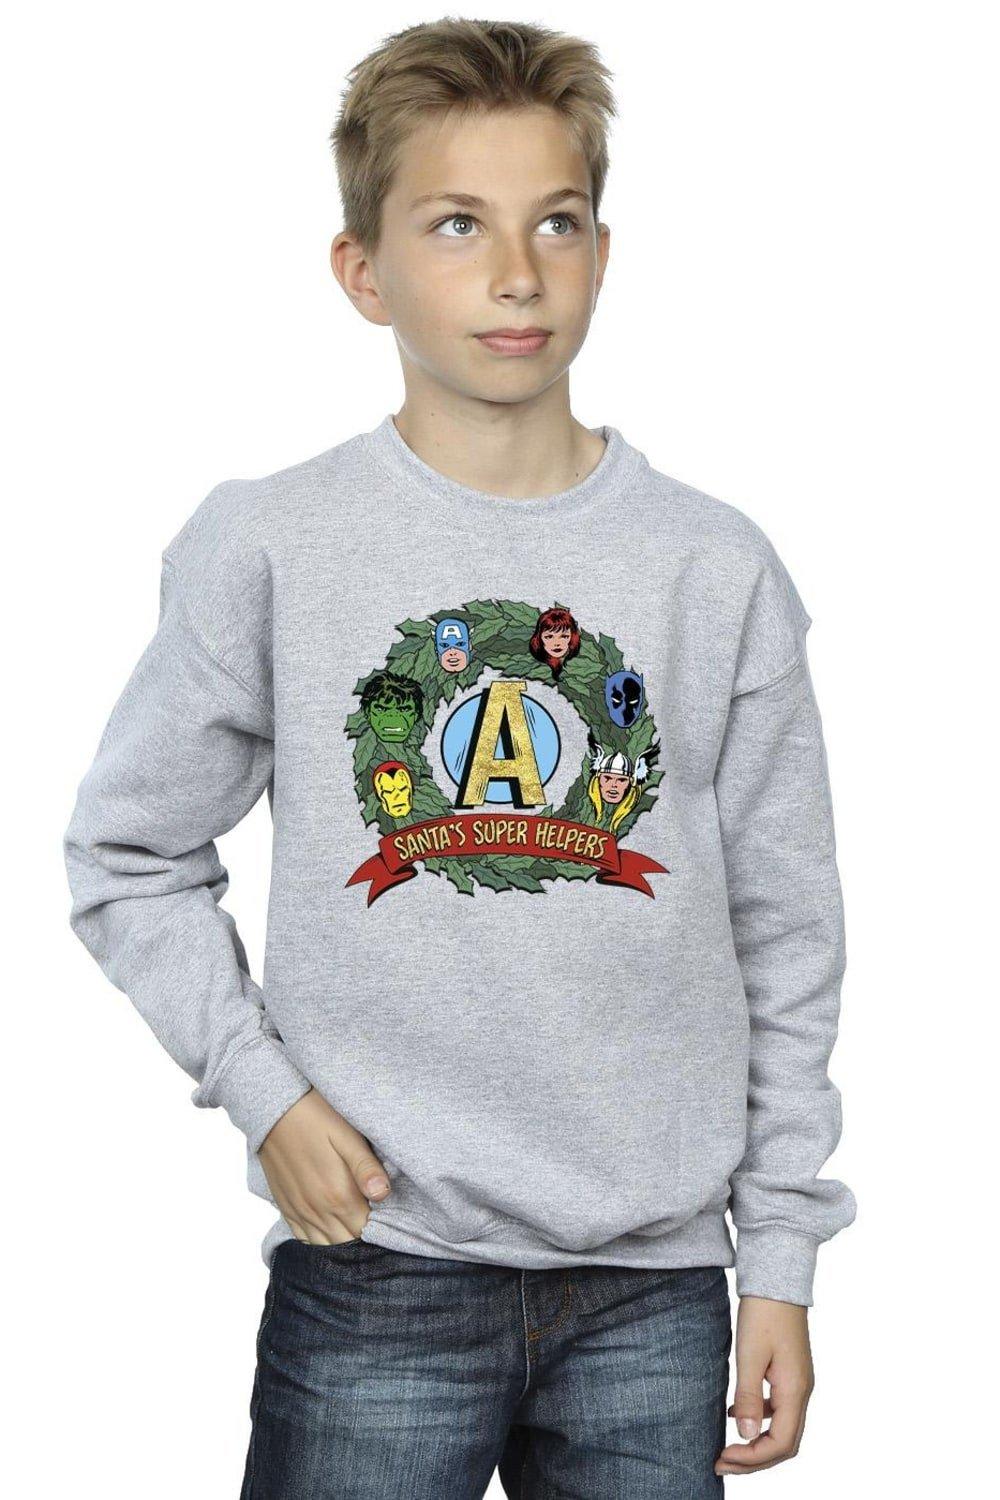 Santa’s Super Helpers Sweatshirt